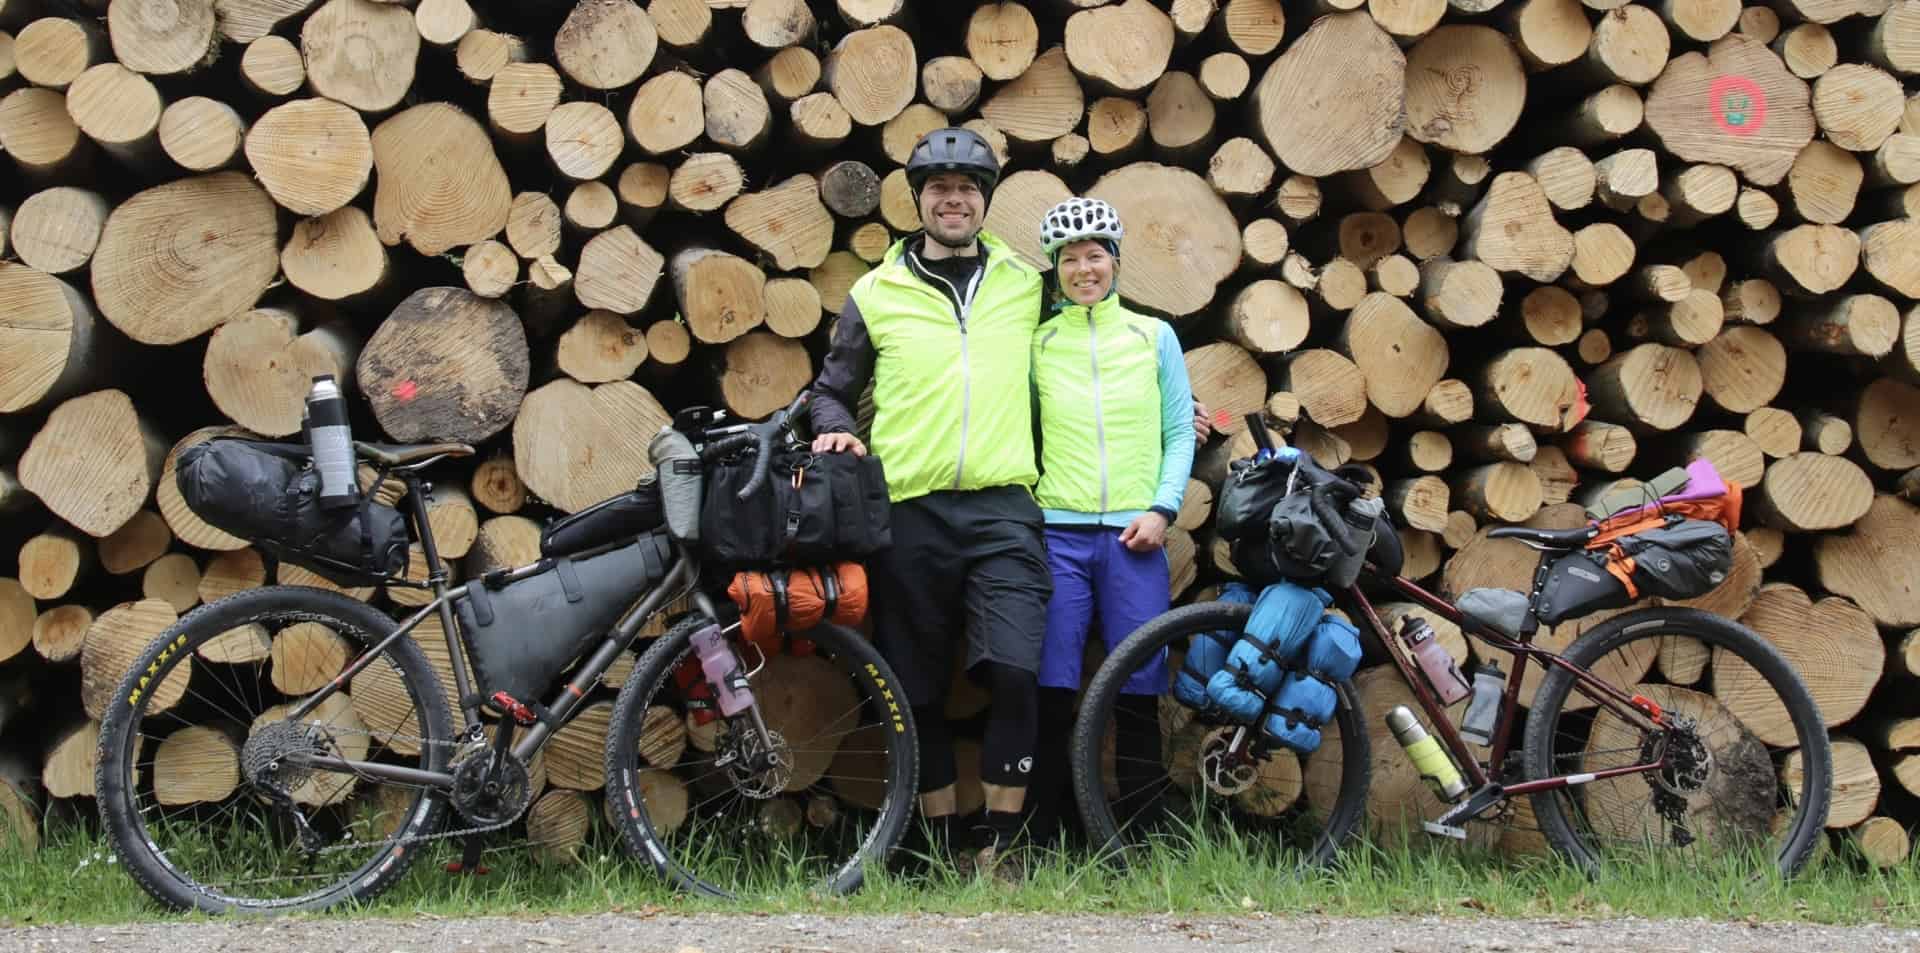 hjul gyde frugtbart Bikepacking, Danmark rundt, eventyr i baghaven! - Erik B. Jørgensen,  eventyrer, foredragsholder, forfatter og guide